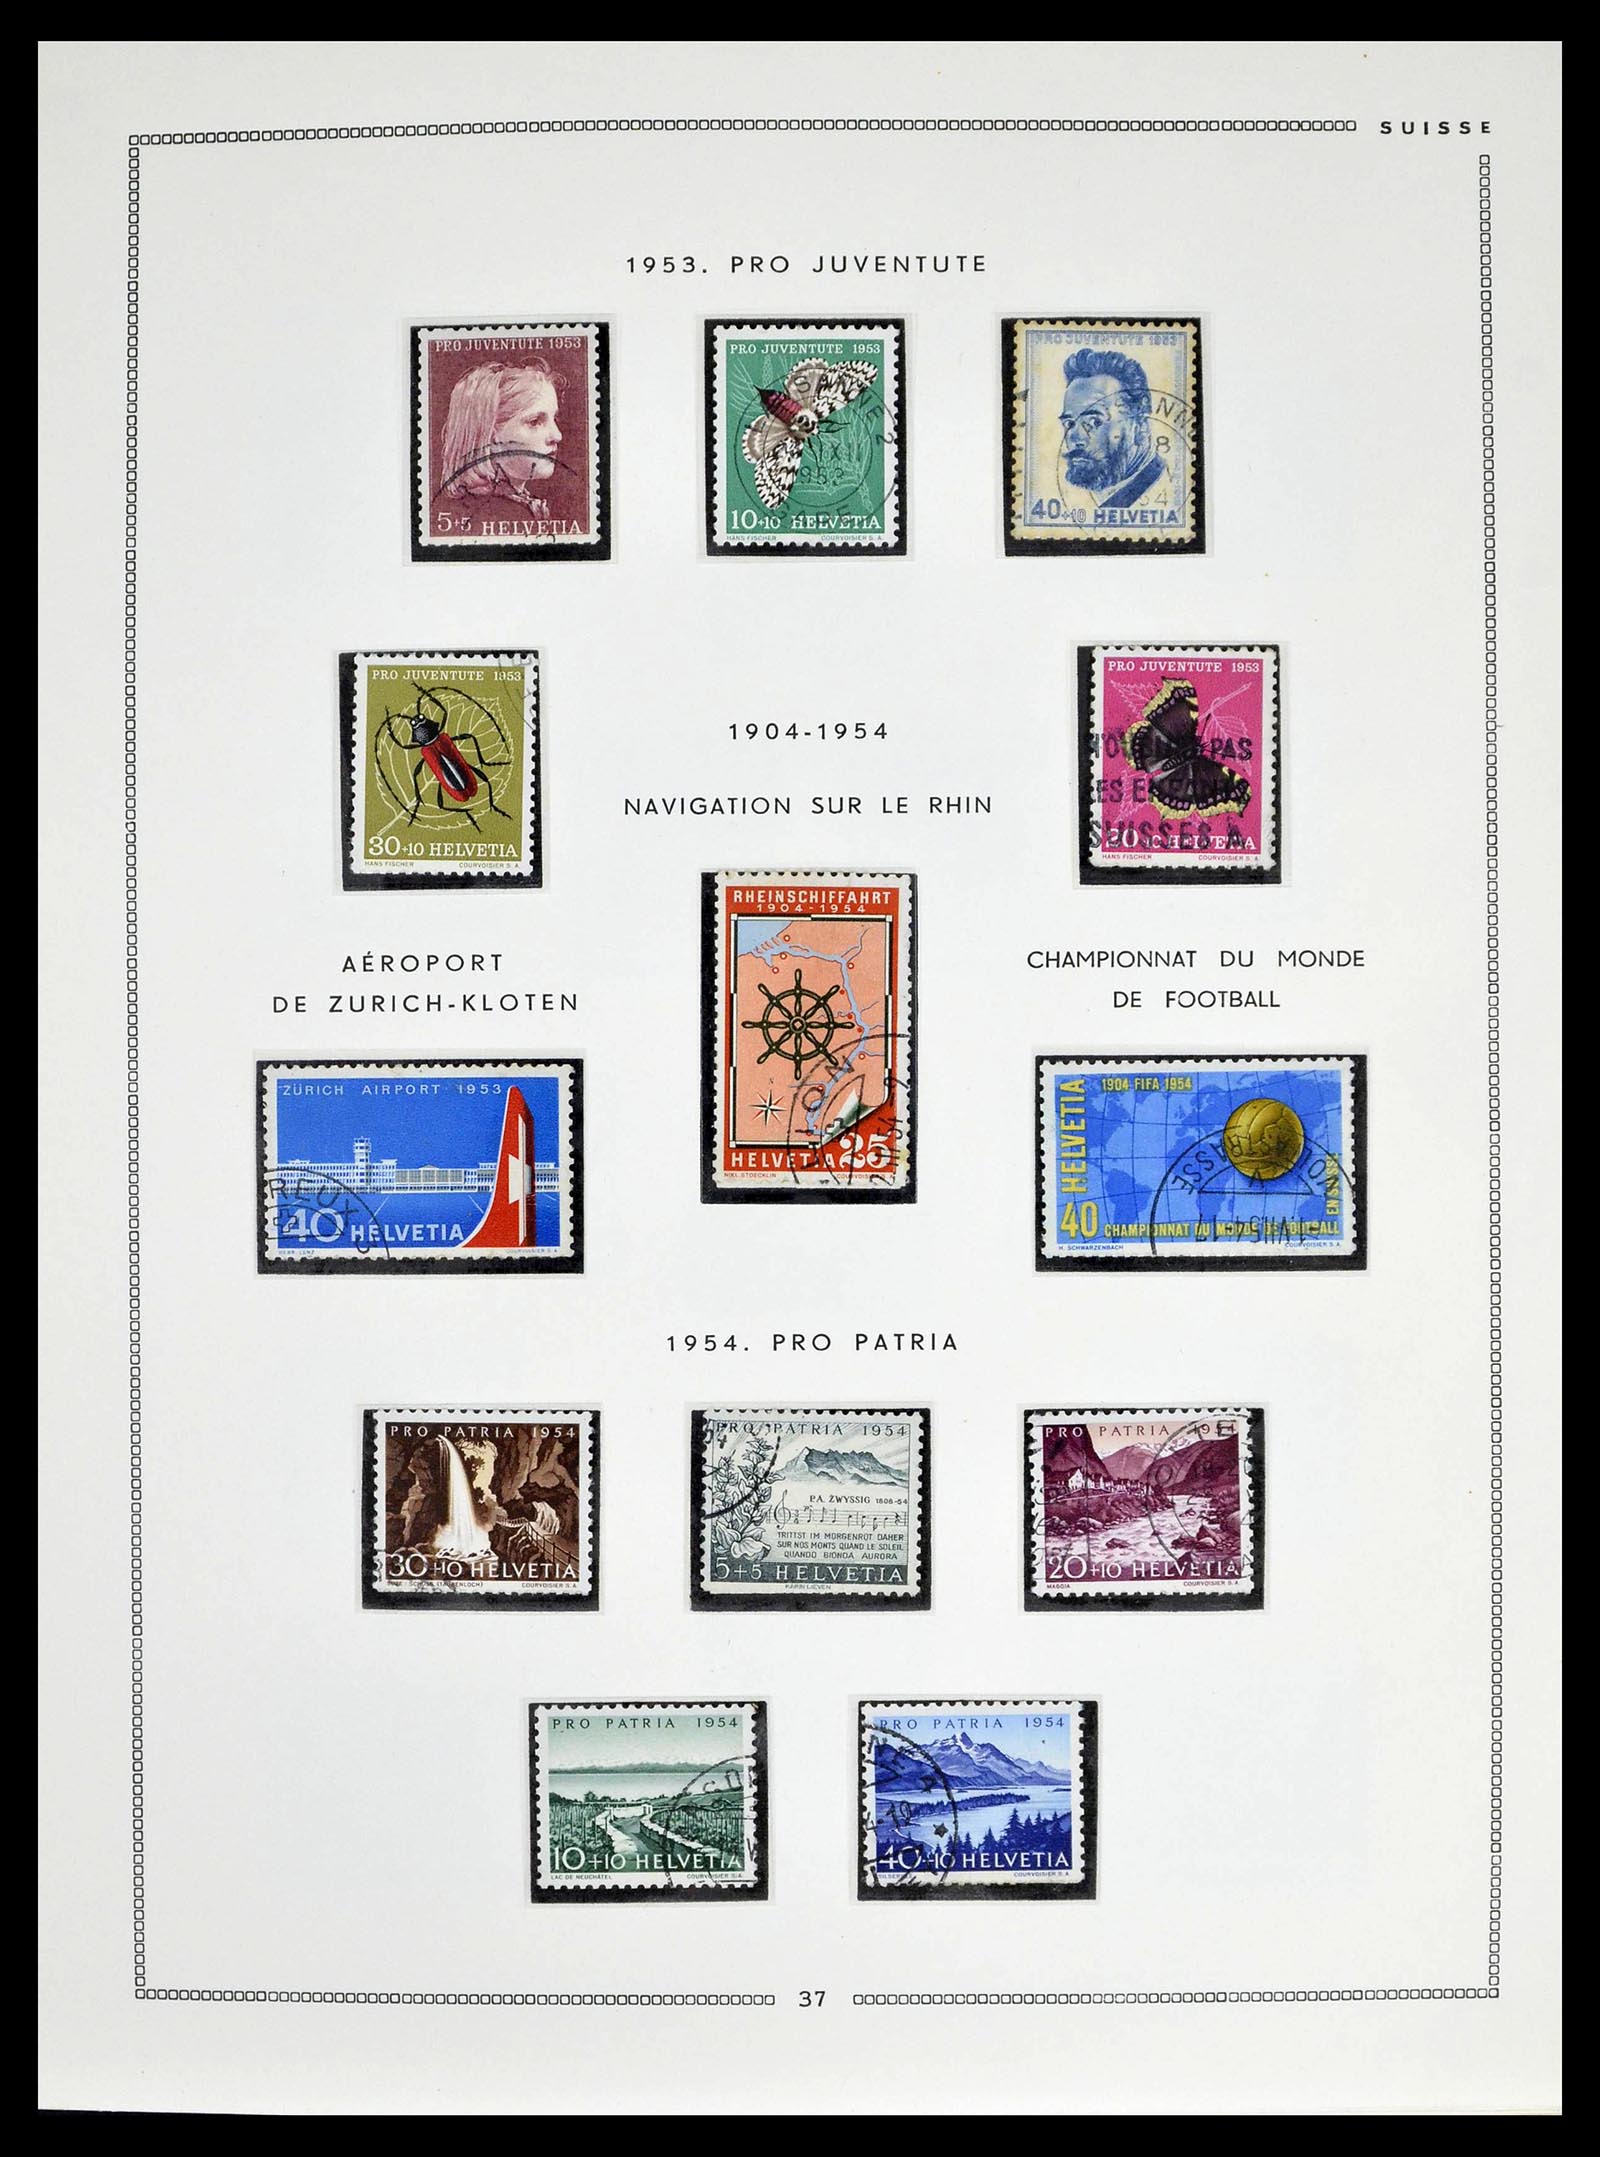 39094 0035 - Stamp collection 39094 Switzerland 1850-2005.